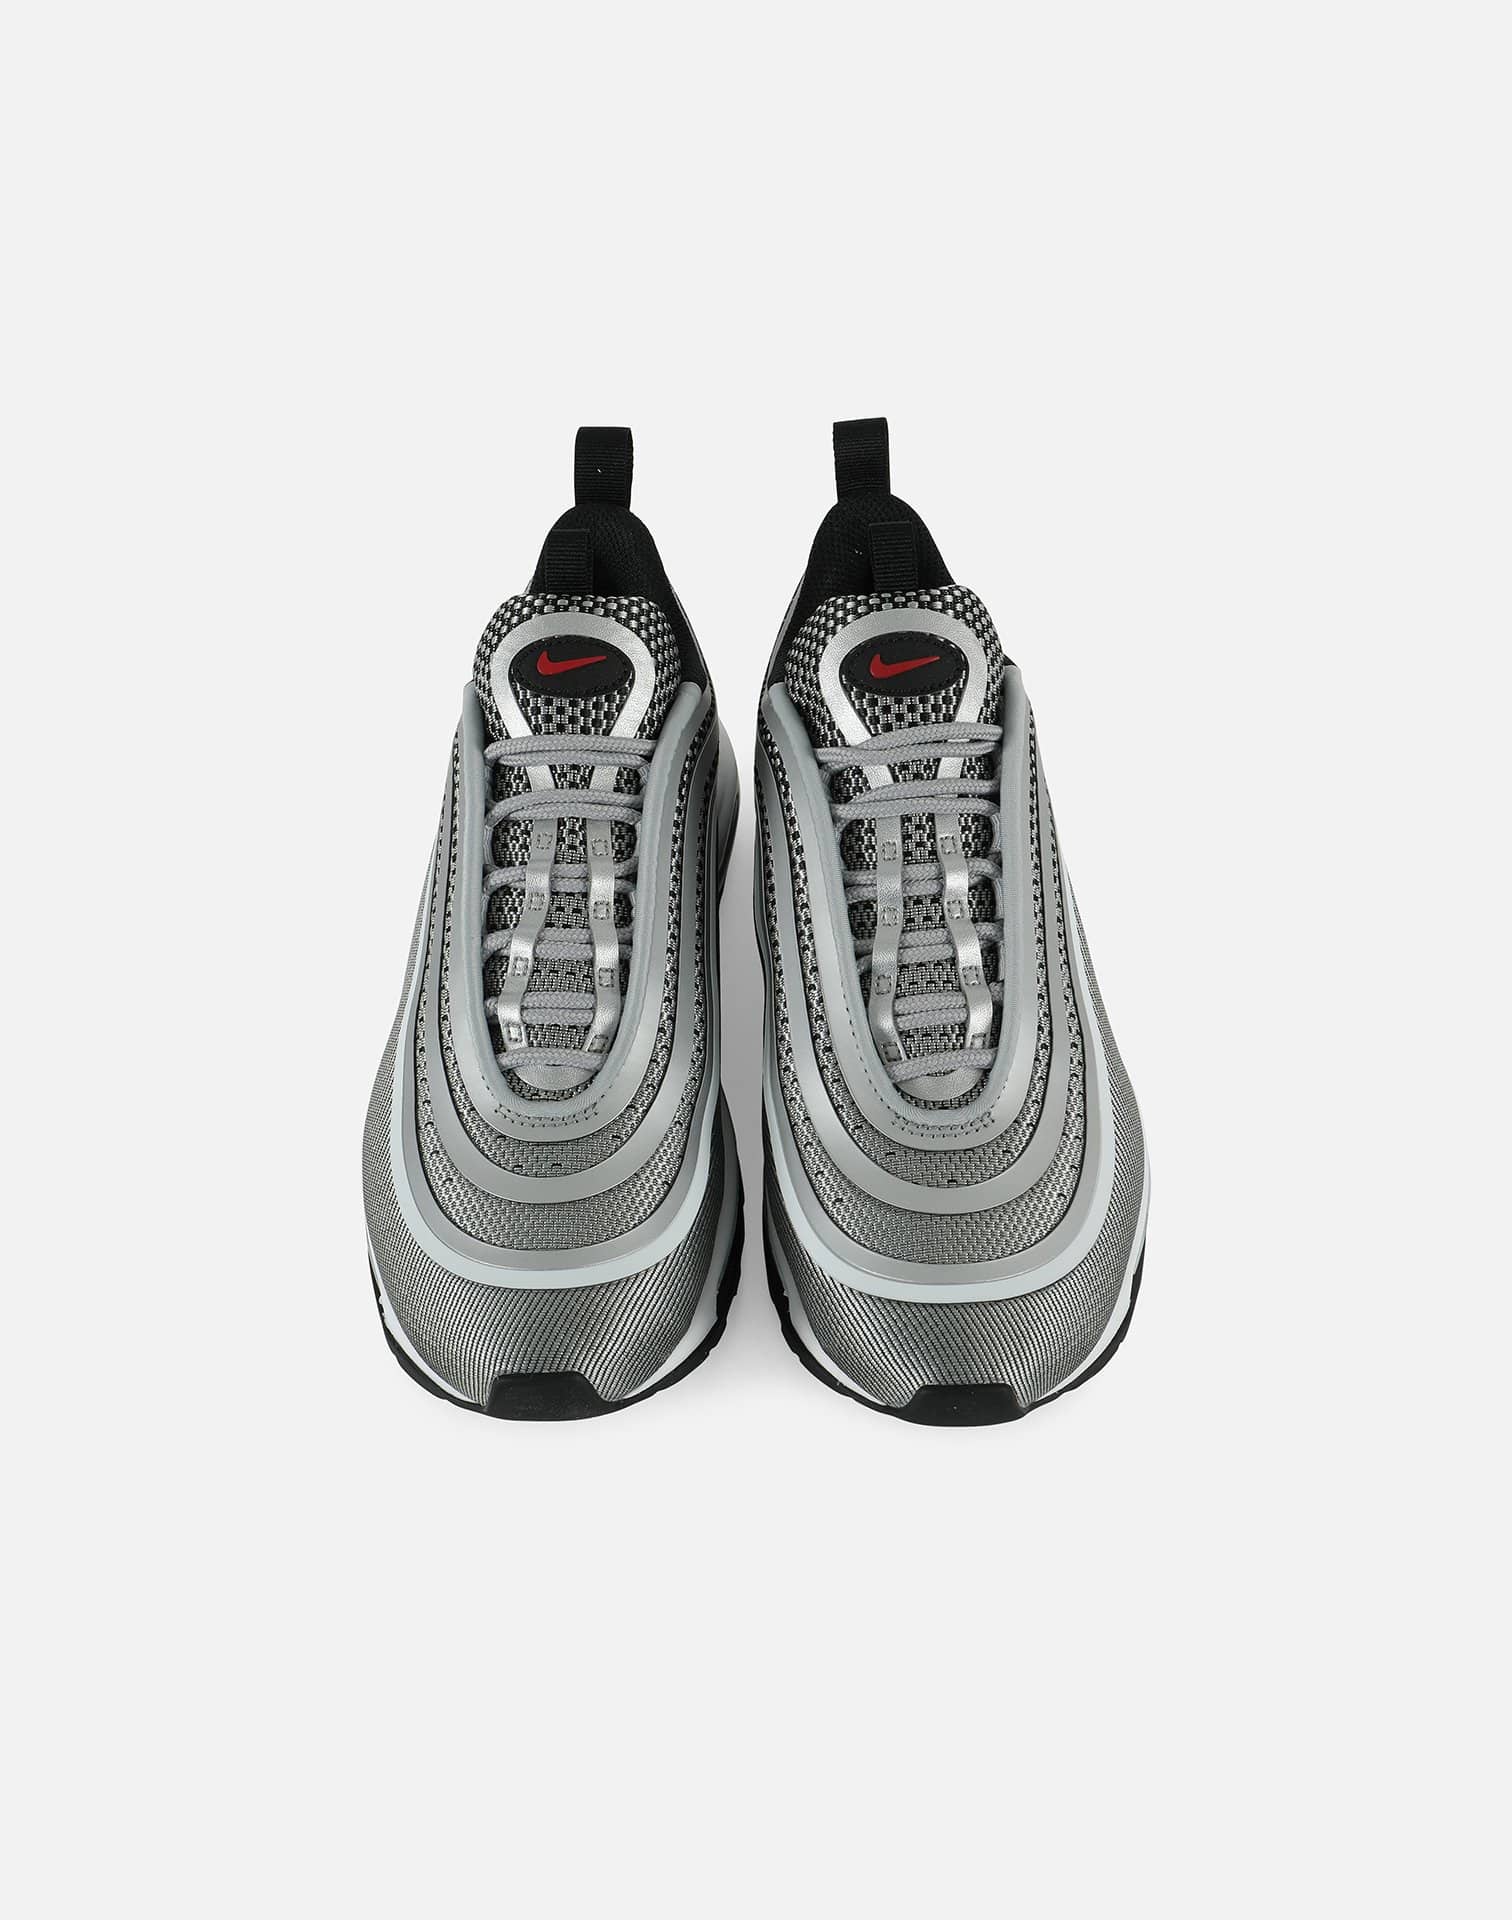 Nike Air Max '97 Ultra '17 Grade-School (Metallic Silver/Black-White-Varsity Red)